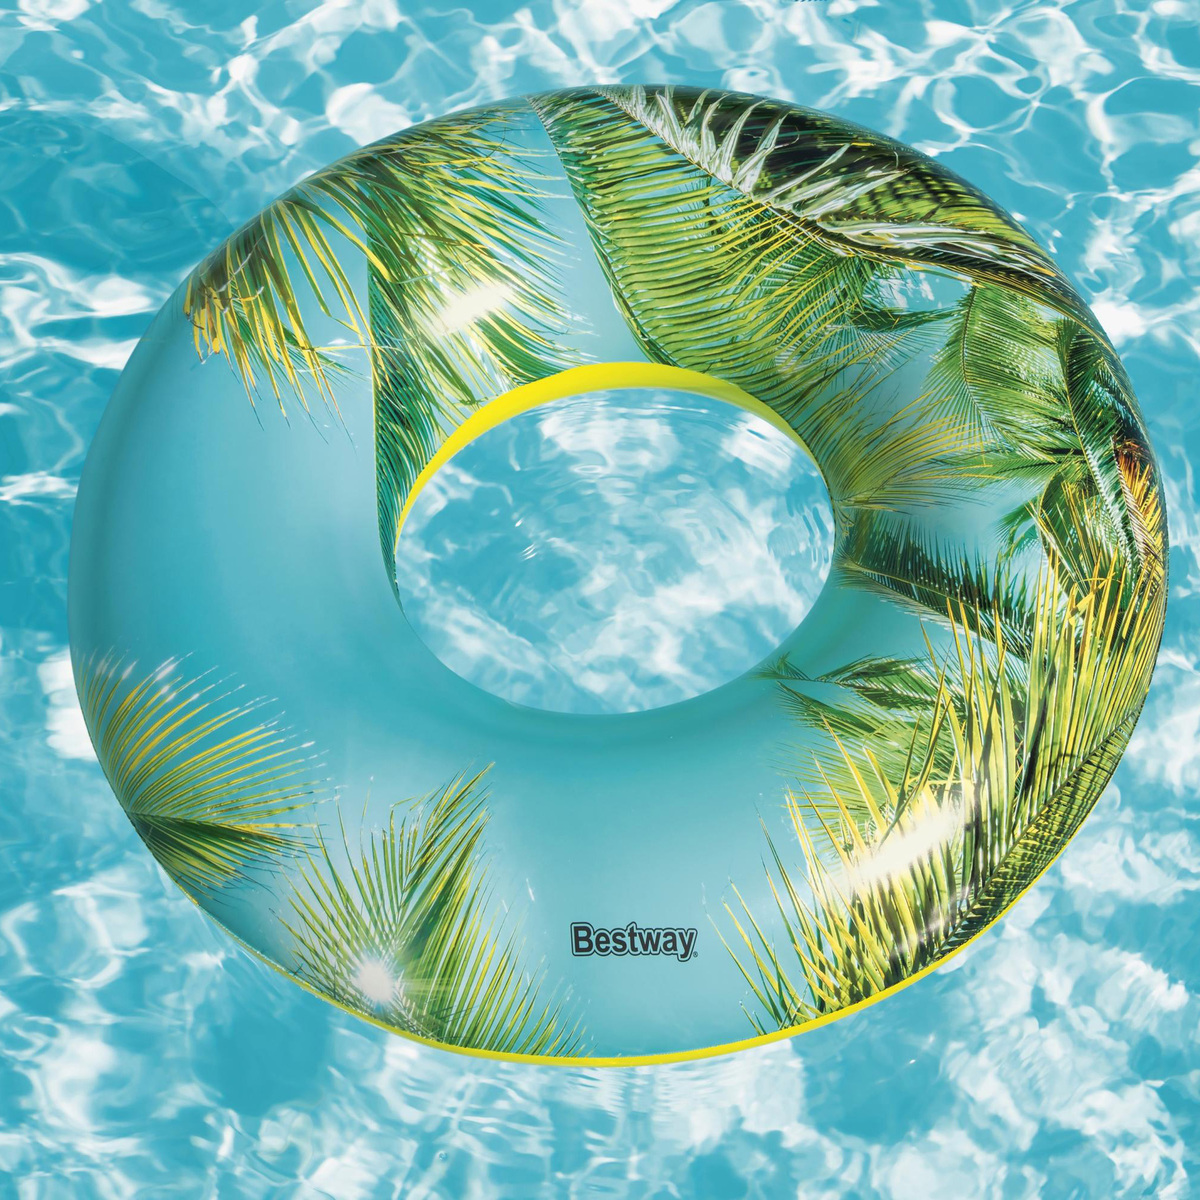 Bestway Sunset Swim Ring 36239BW Assorted